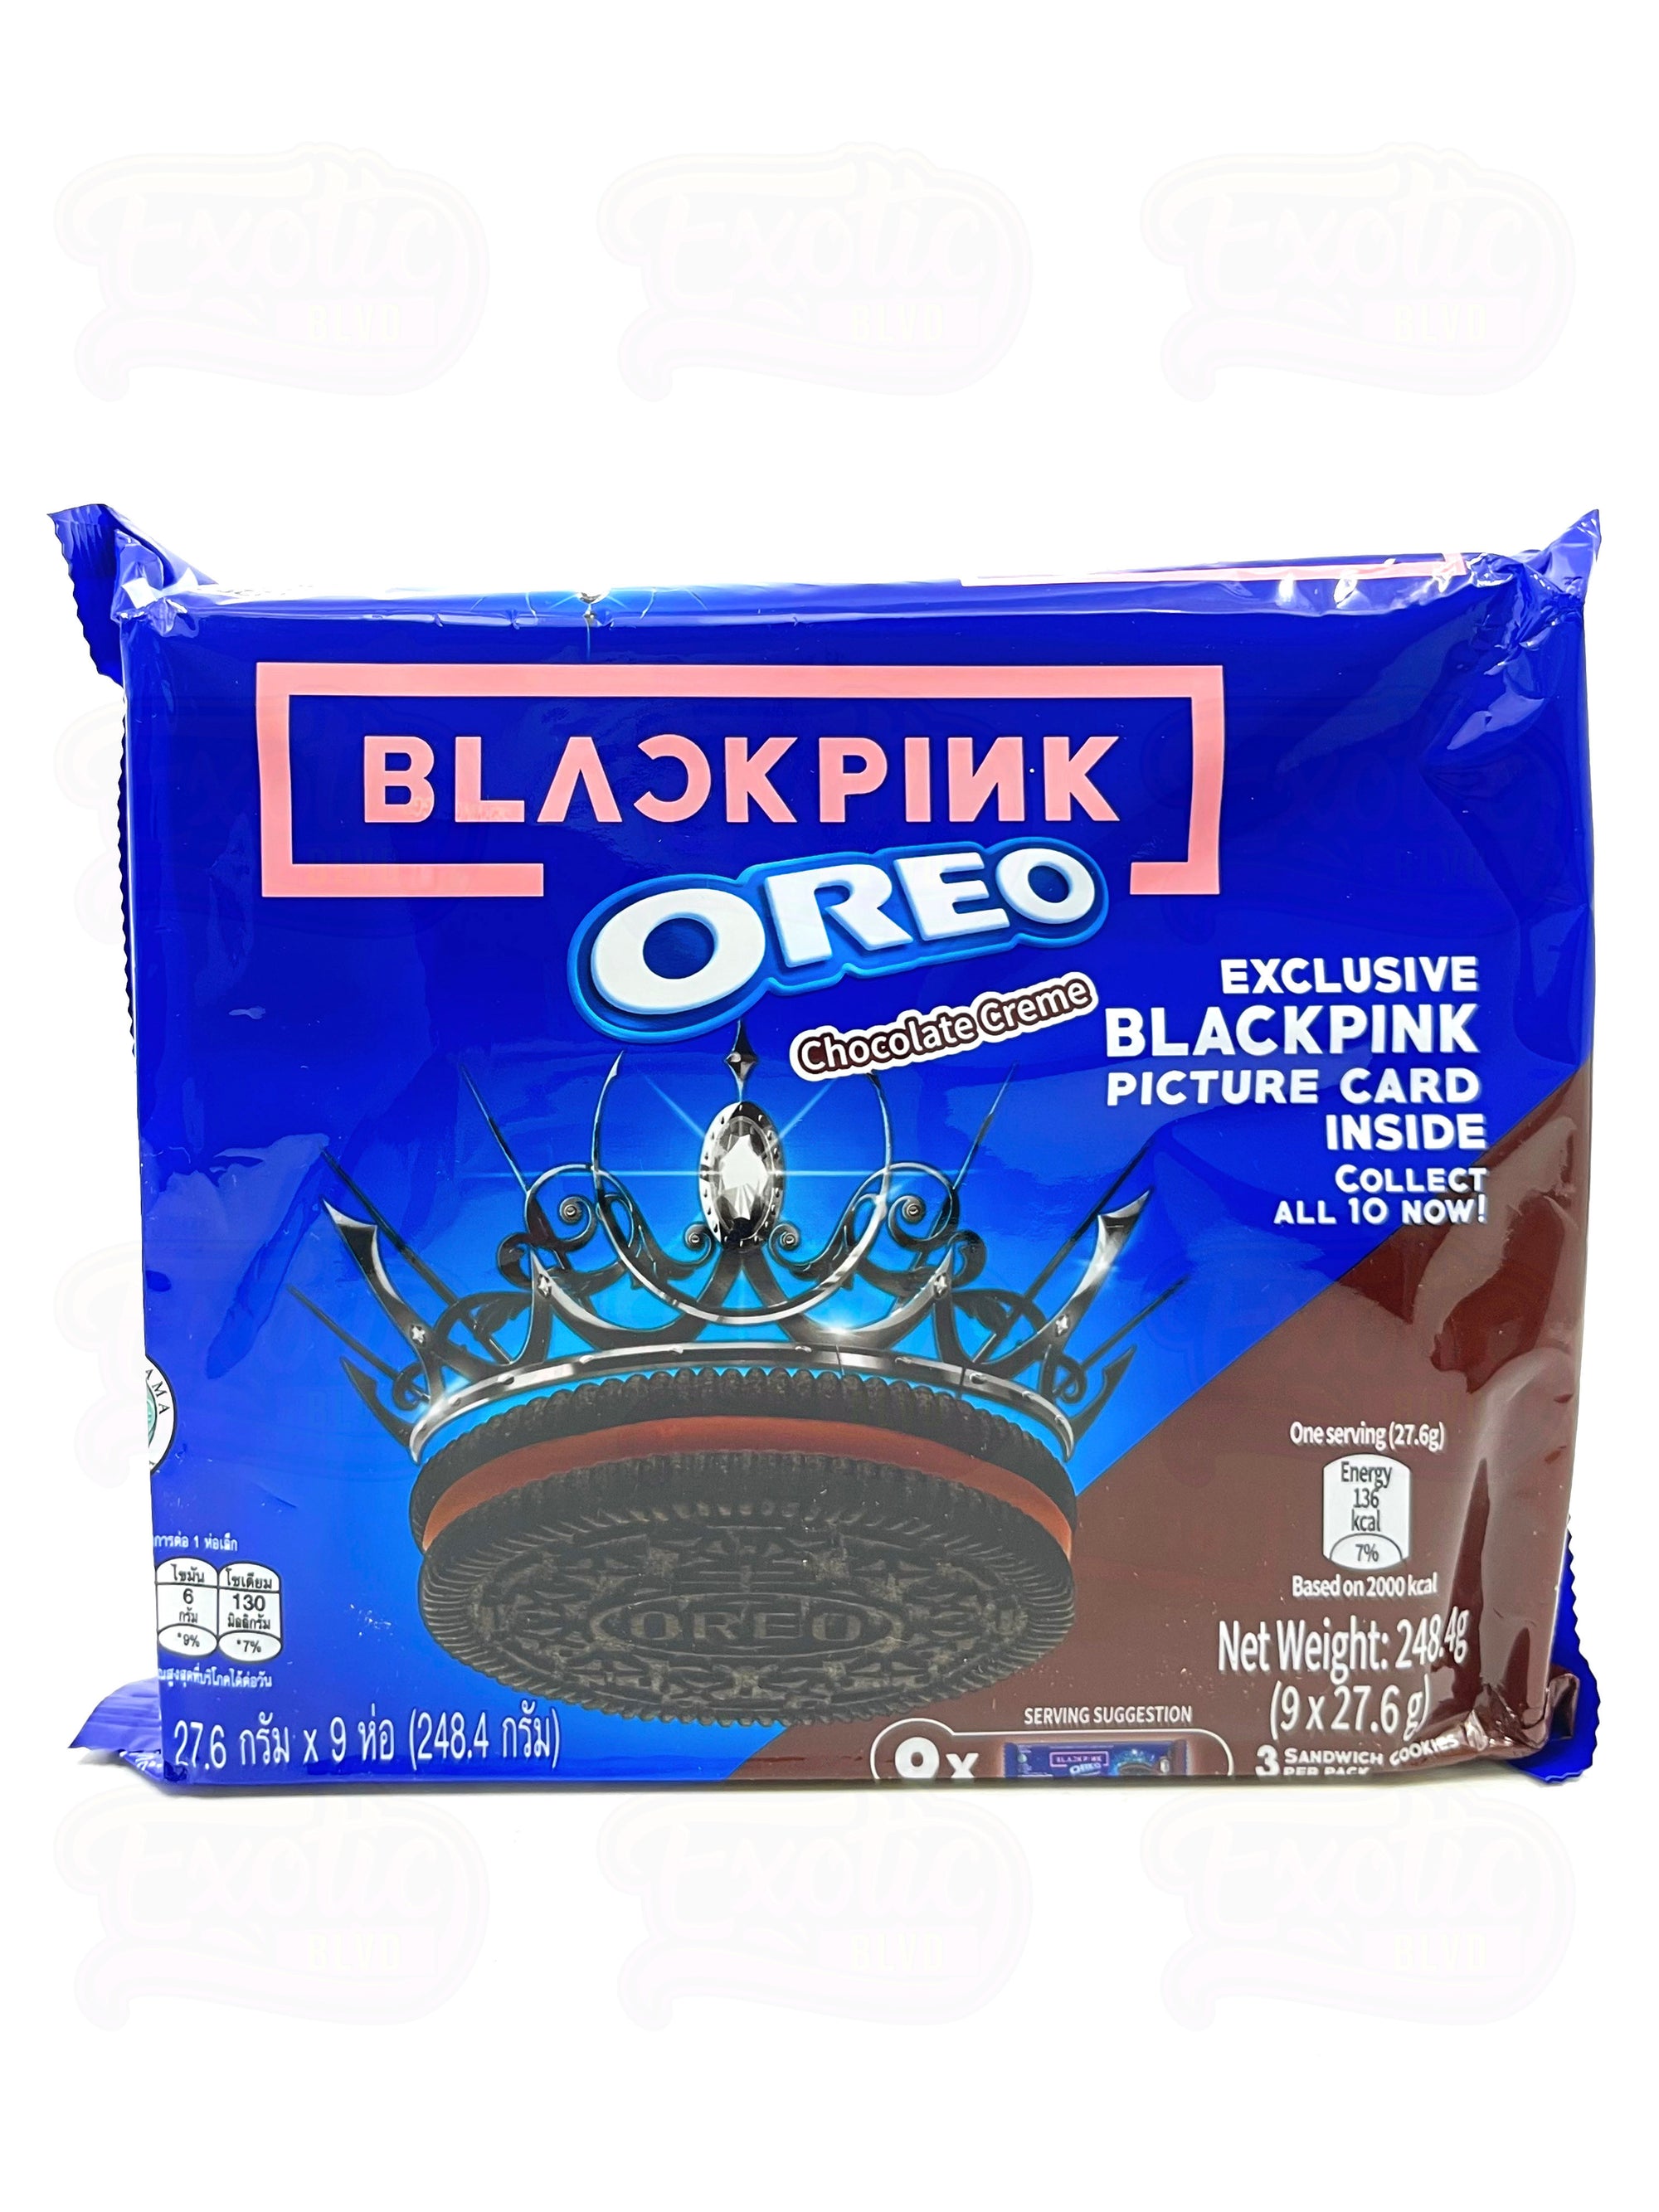 Blackpink Oreos Chocolate Creme